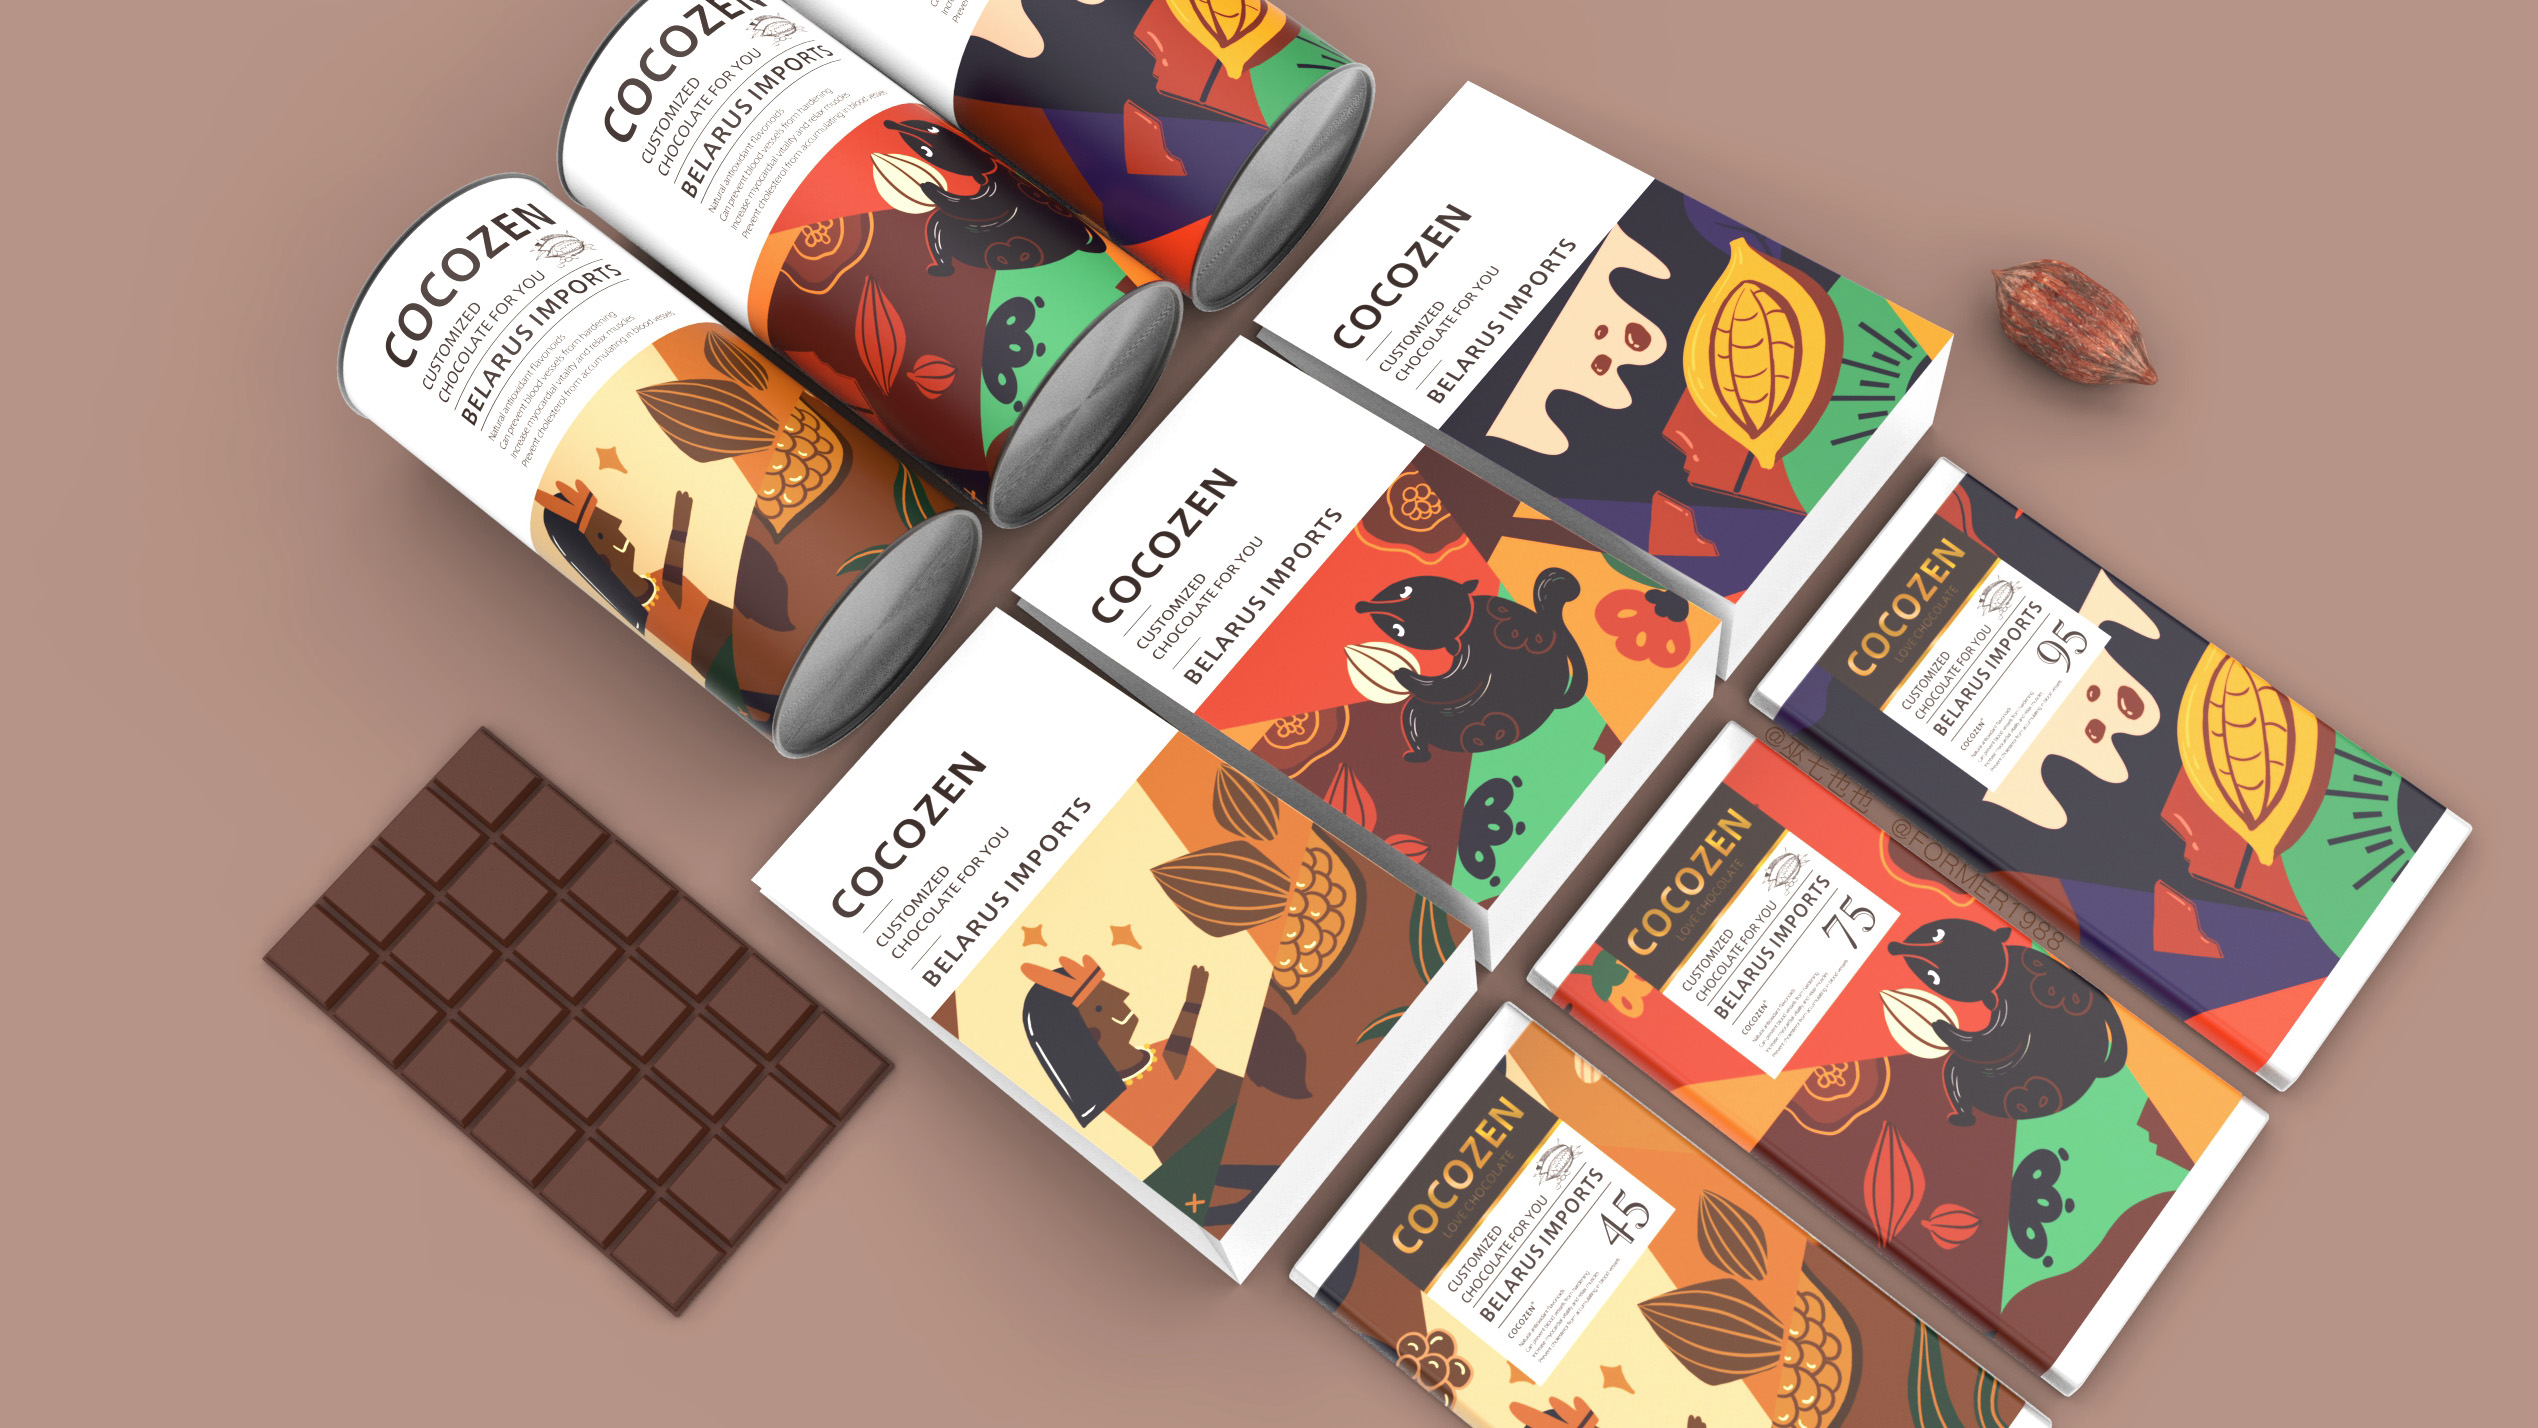 COCOZEN | 巧克力包装设计 | 原创 插画